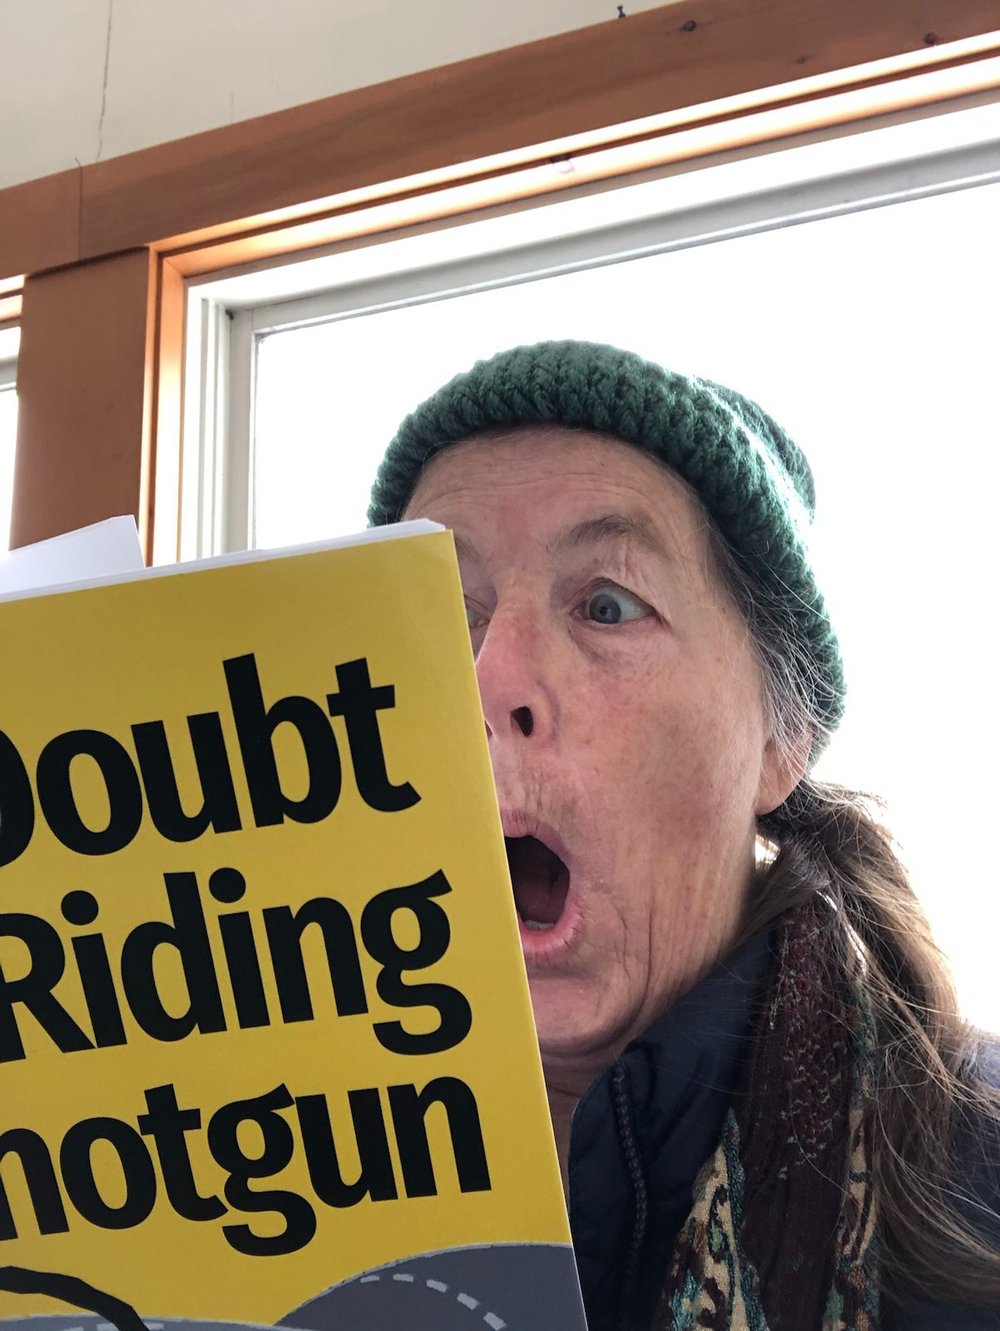 Woman_Reading_Doubt_Riding_Shotgun.jpg